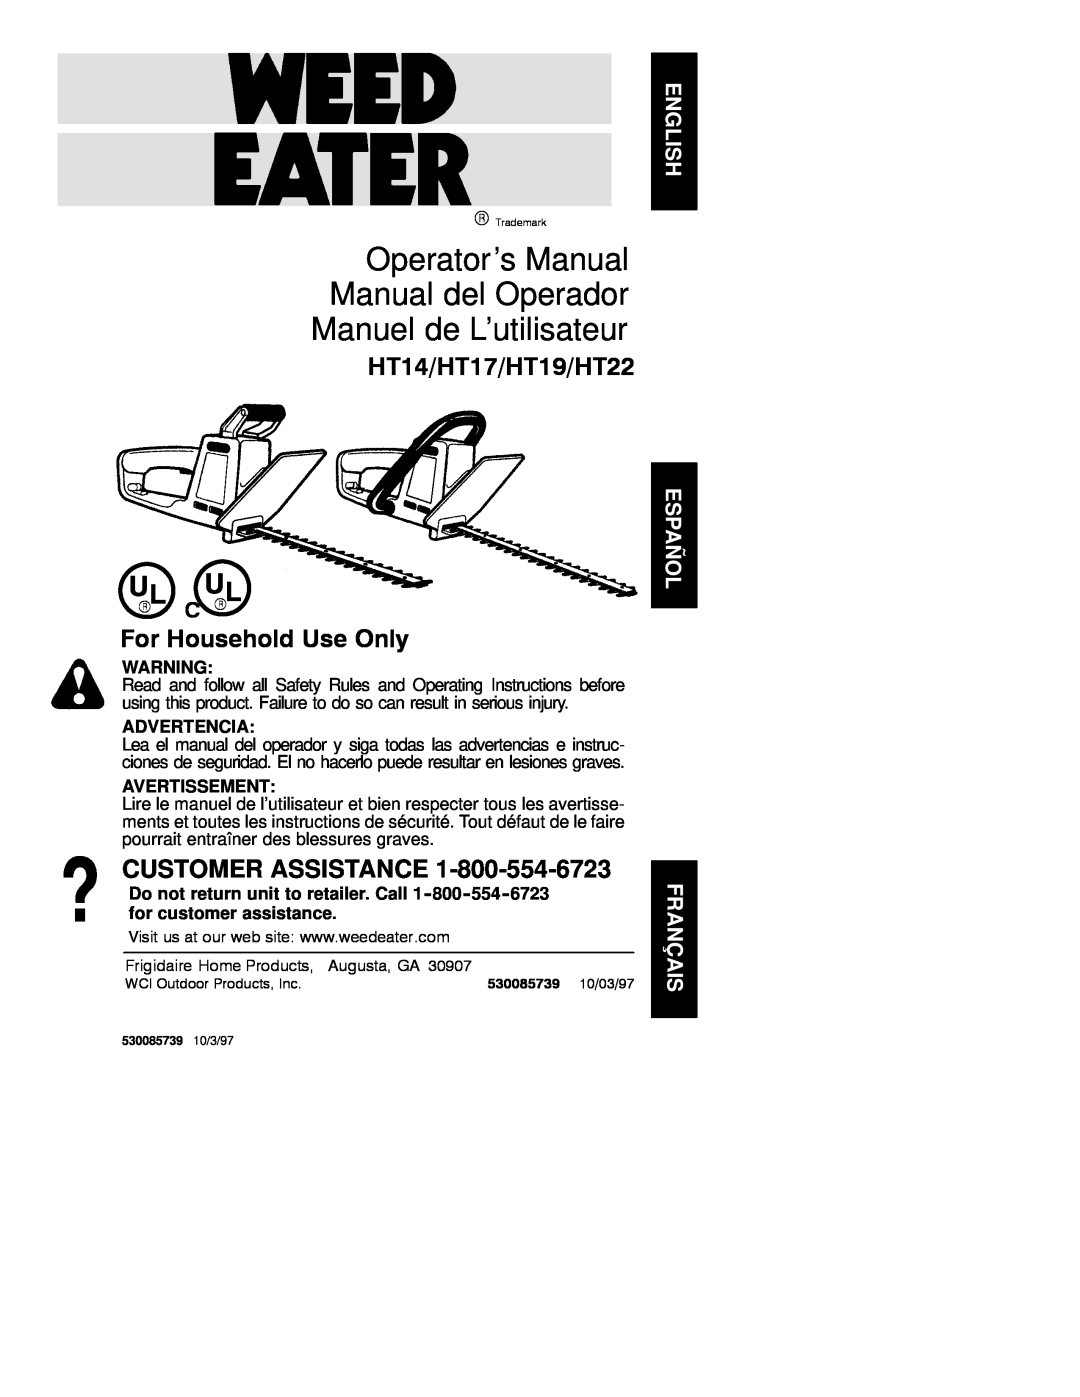 Weed Eater HT17 manual Advertencia, Avertissement, Operator’s Manual Manual del Operador Manuel de L’utilisateur, R Cr 